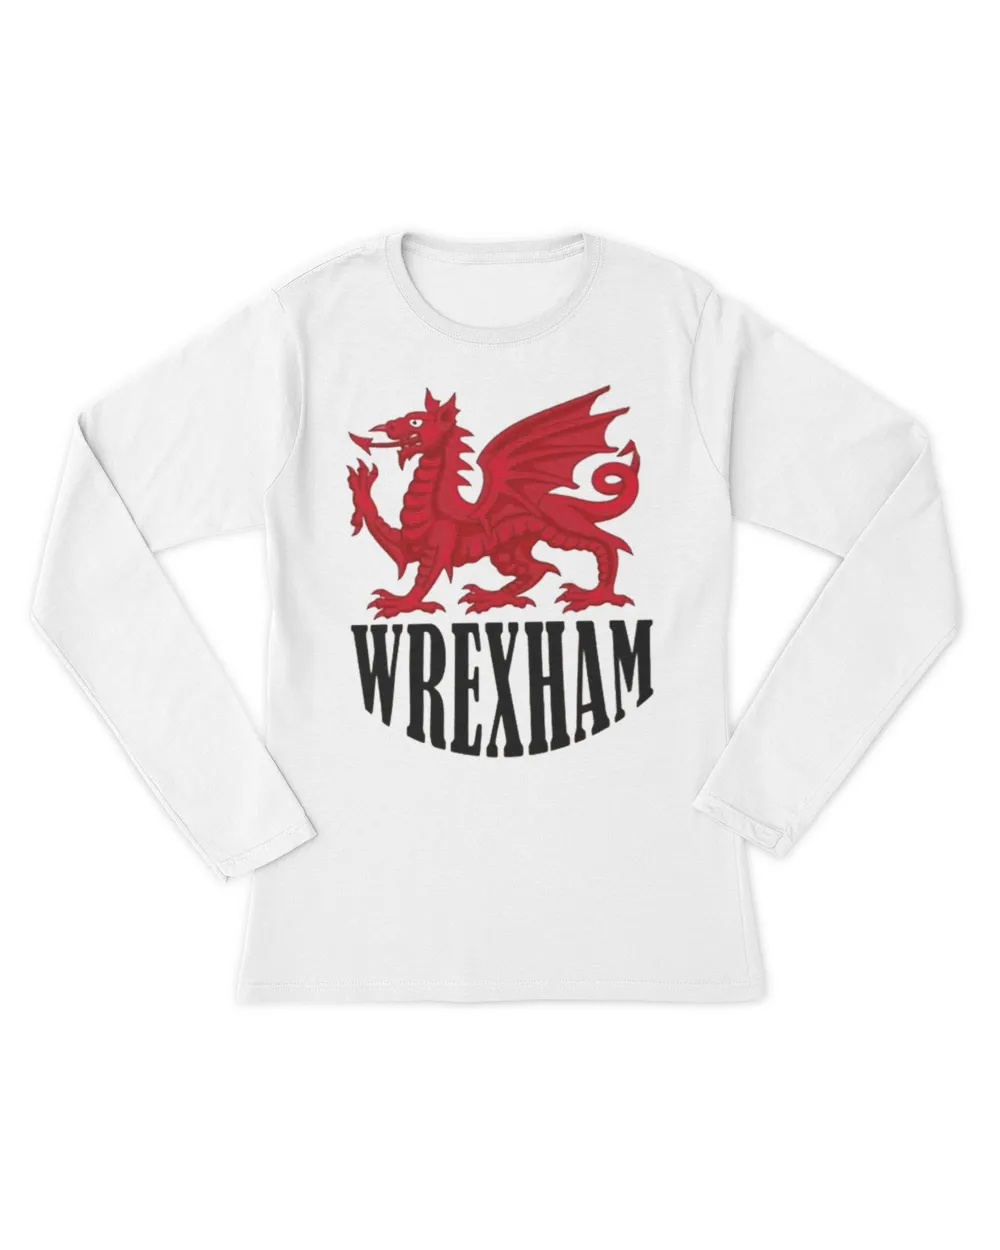 Wrexham red dragon symbol football association of Wales 2022 shirt